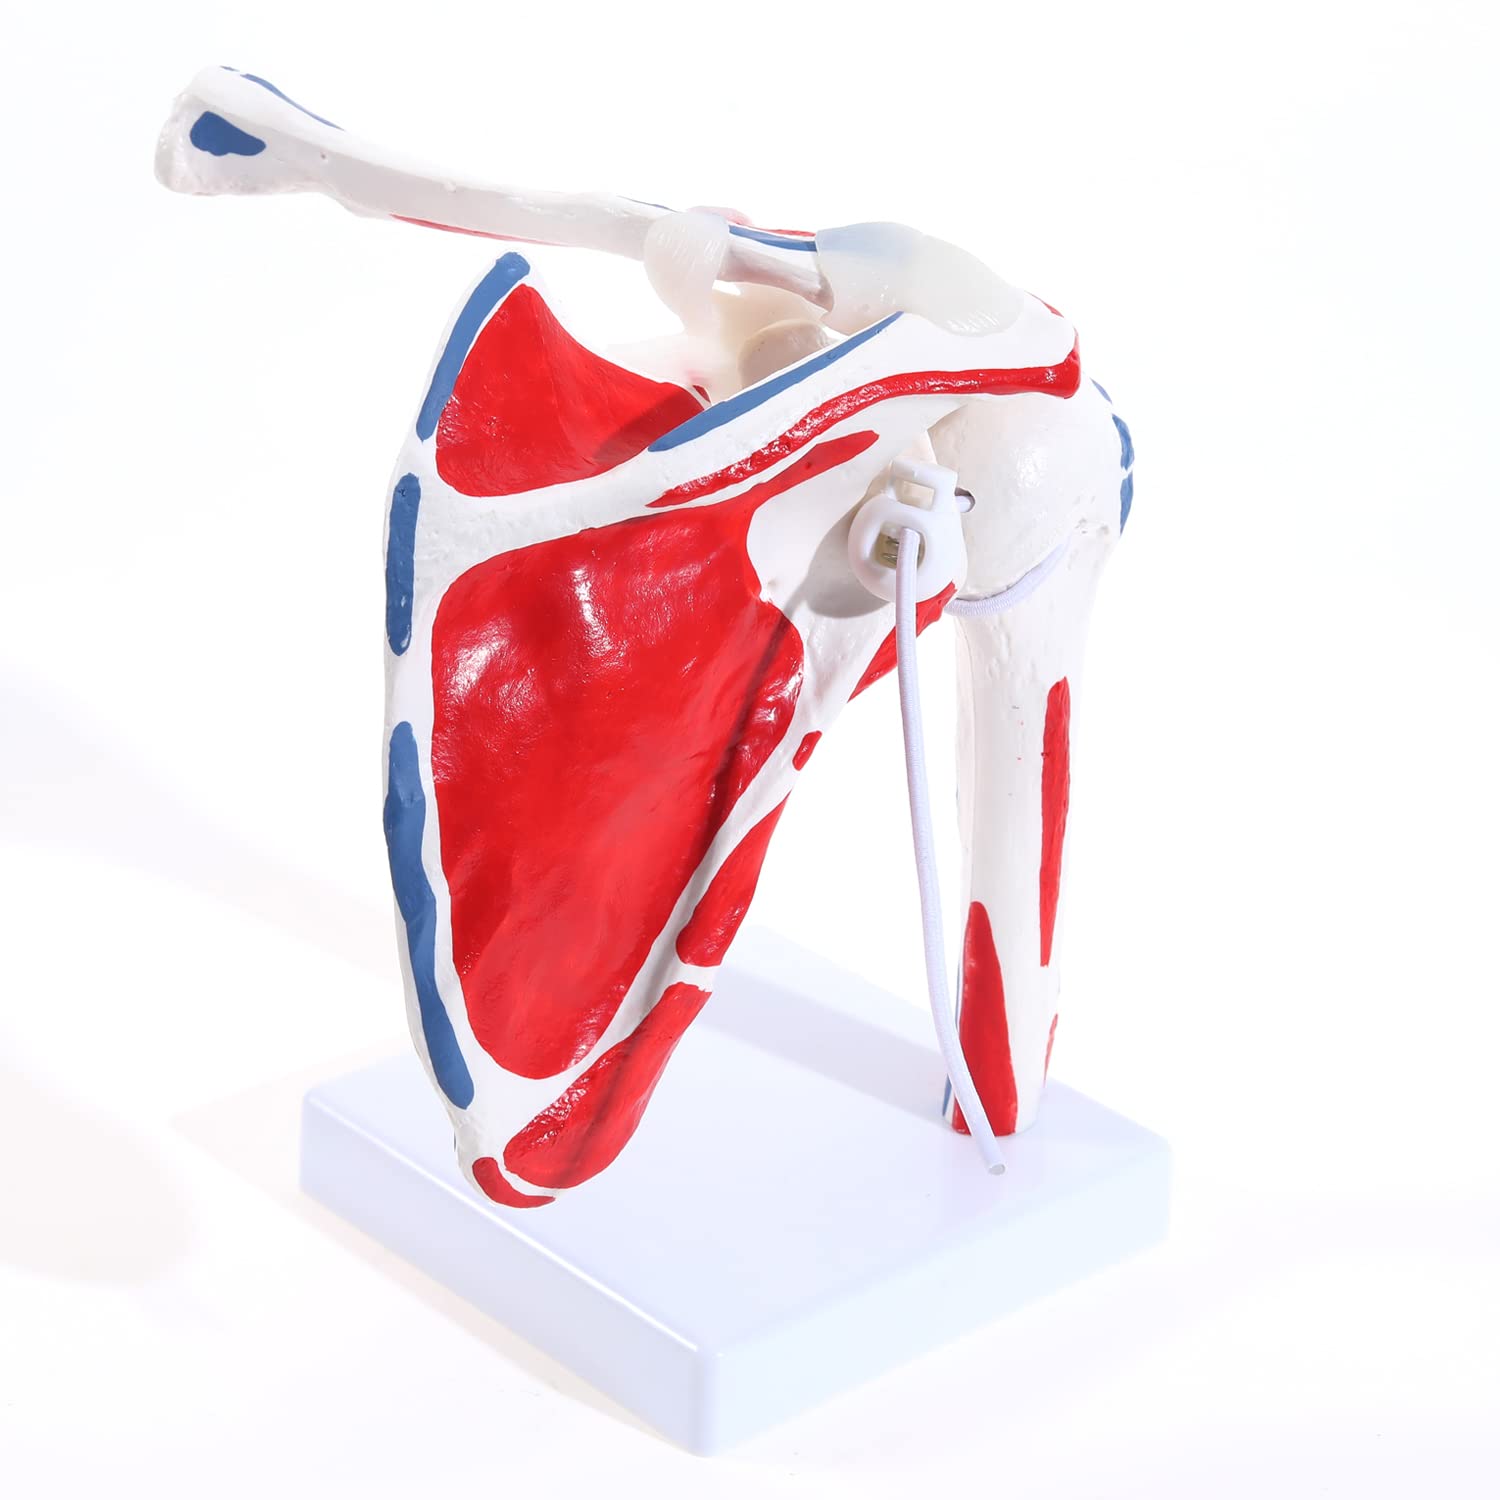 RONTEN New Shoulder Joint Model with Muscle Life Size Human Anatomical Shoulder Ligament Model